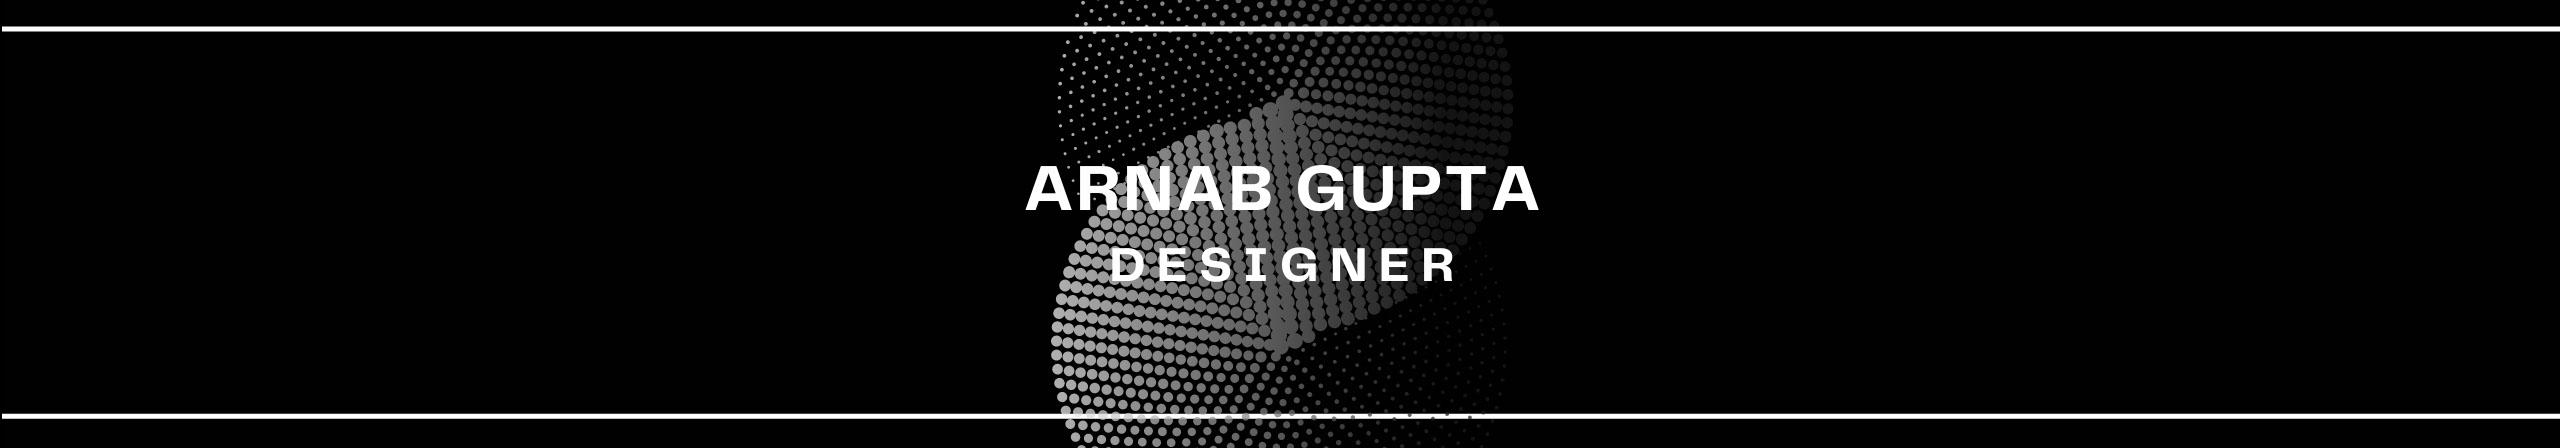 Profielbanner van Arnab Gupta